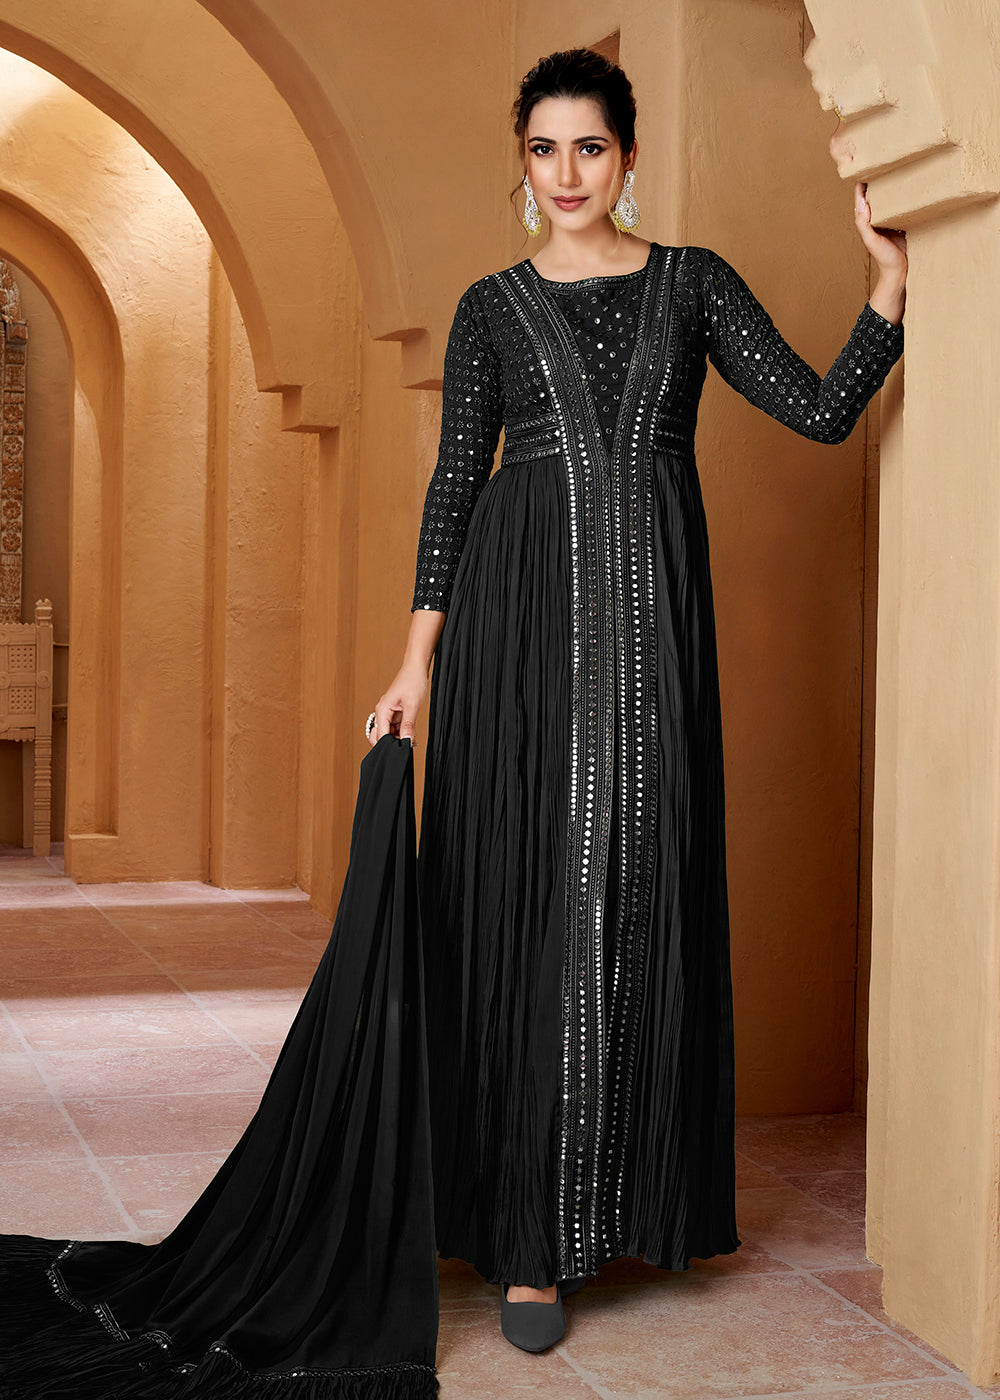 Buy Now Black Crushed Georgette Mirror Lucknowi Work Anarkali Dress Online in USA, UK, Australia, New Zealand, Canada & Worldwide at Empress Clothing. 